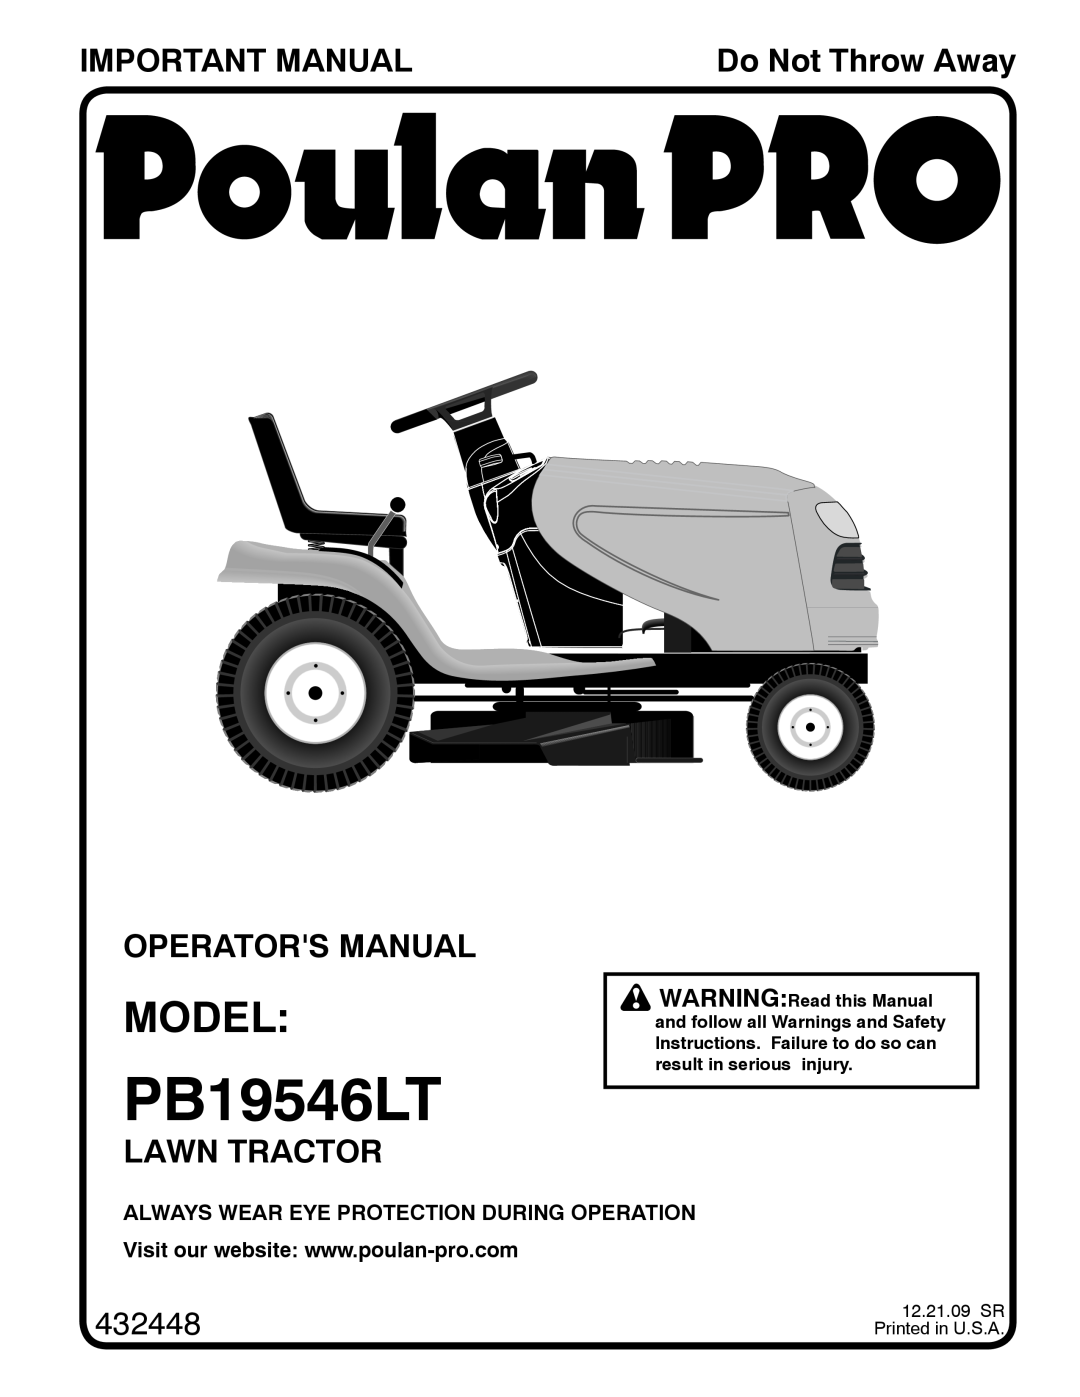 Poulan 432448, 96042011300 manual Model, Important Manual, Operators Manual, Lawn Tractor, Do Not Throw Away, PB19546LT 